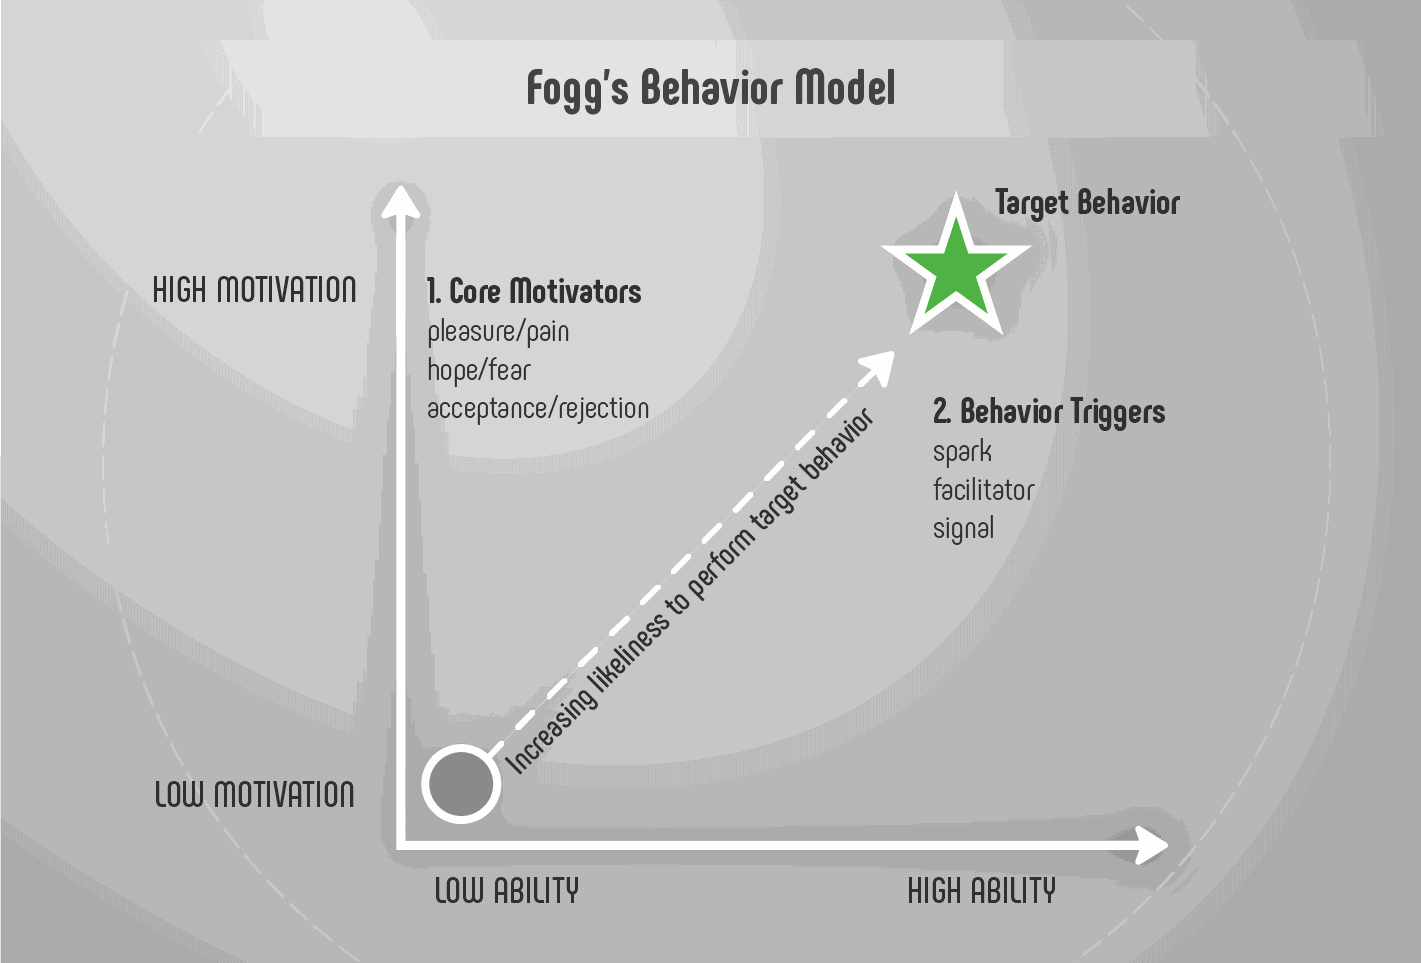 Fogg's behavior model and Engagement Loop